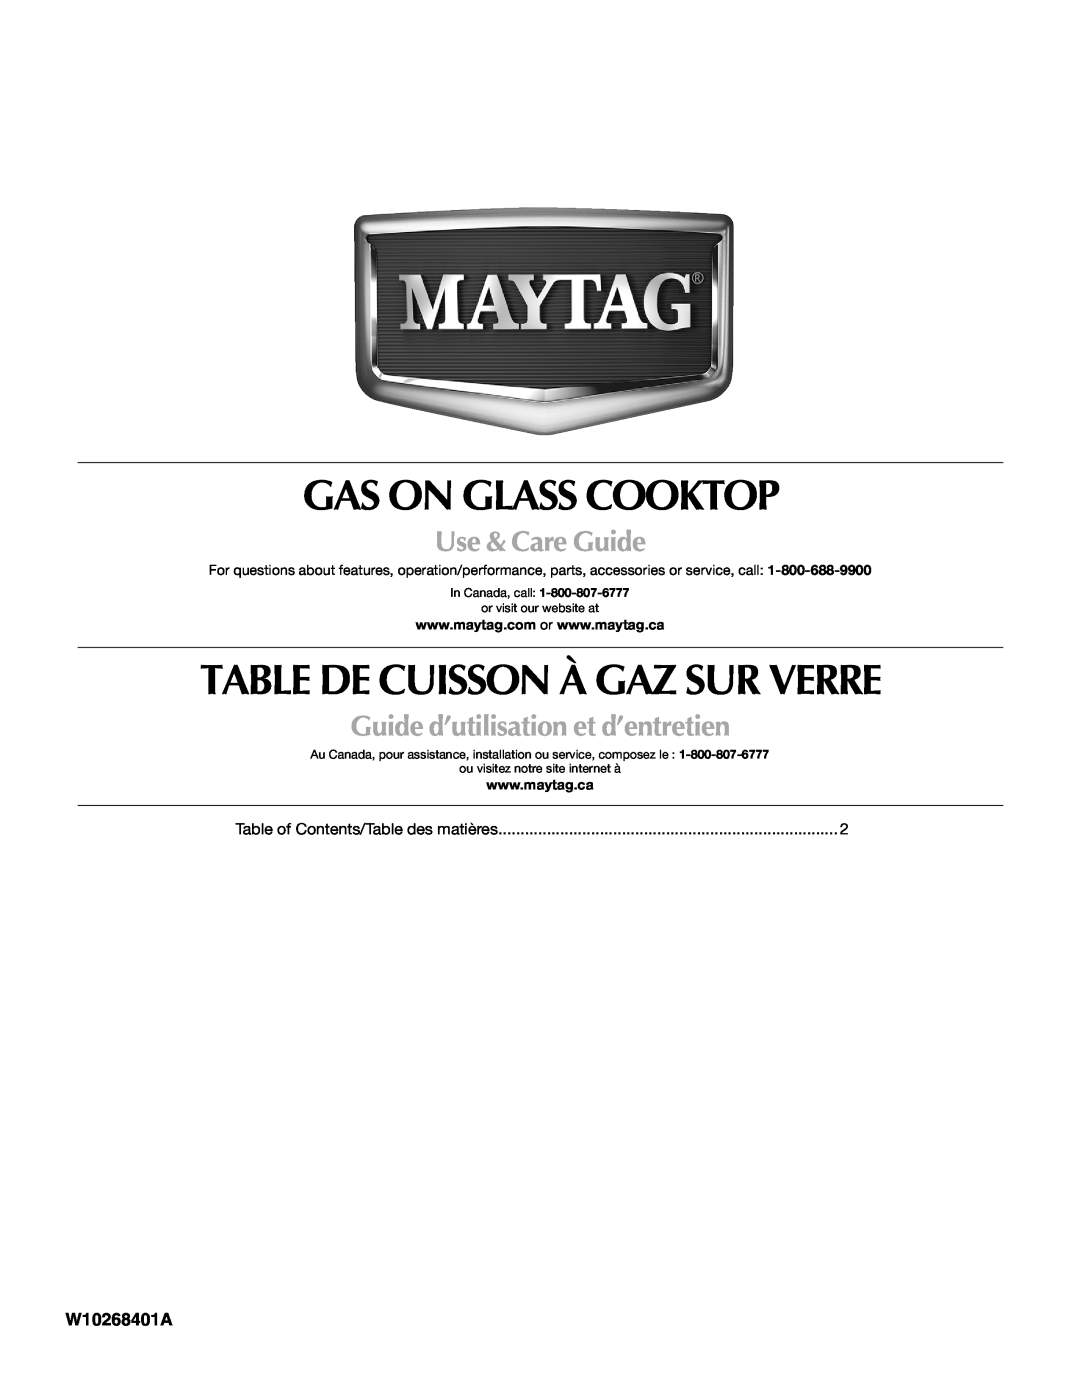 Maytag W10268401A manual Gas On Glass Cooktop, Table De Cuisson À Gaz Sur Verre, Use & Care Guide 